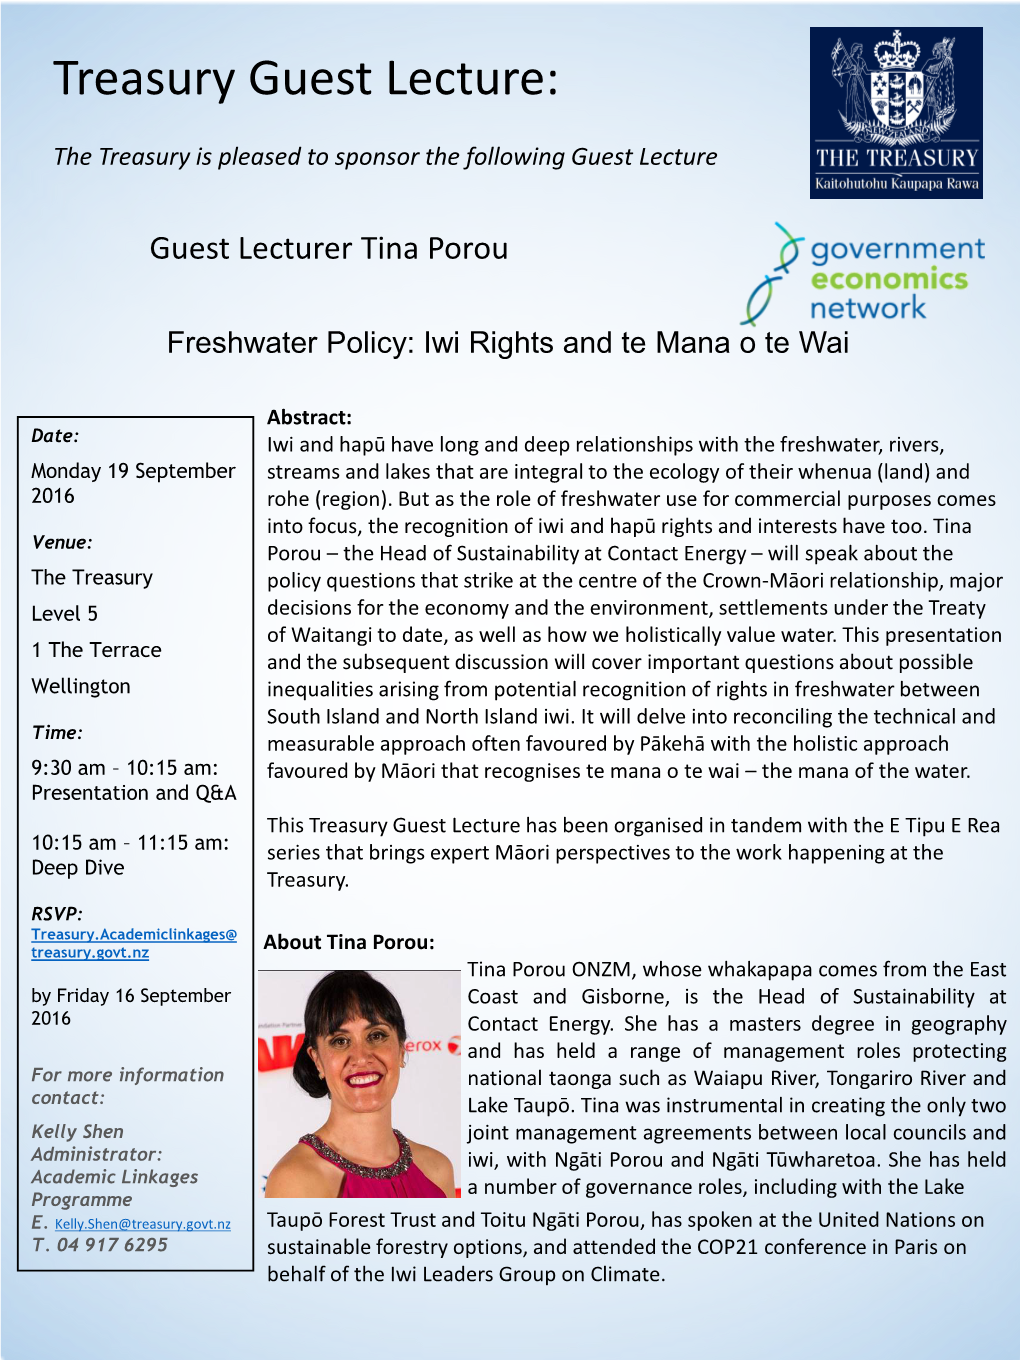 Freshwater Policy: Iwi Rights and Te Mana O Te Wai